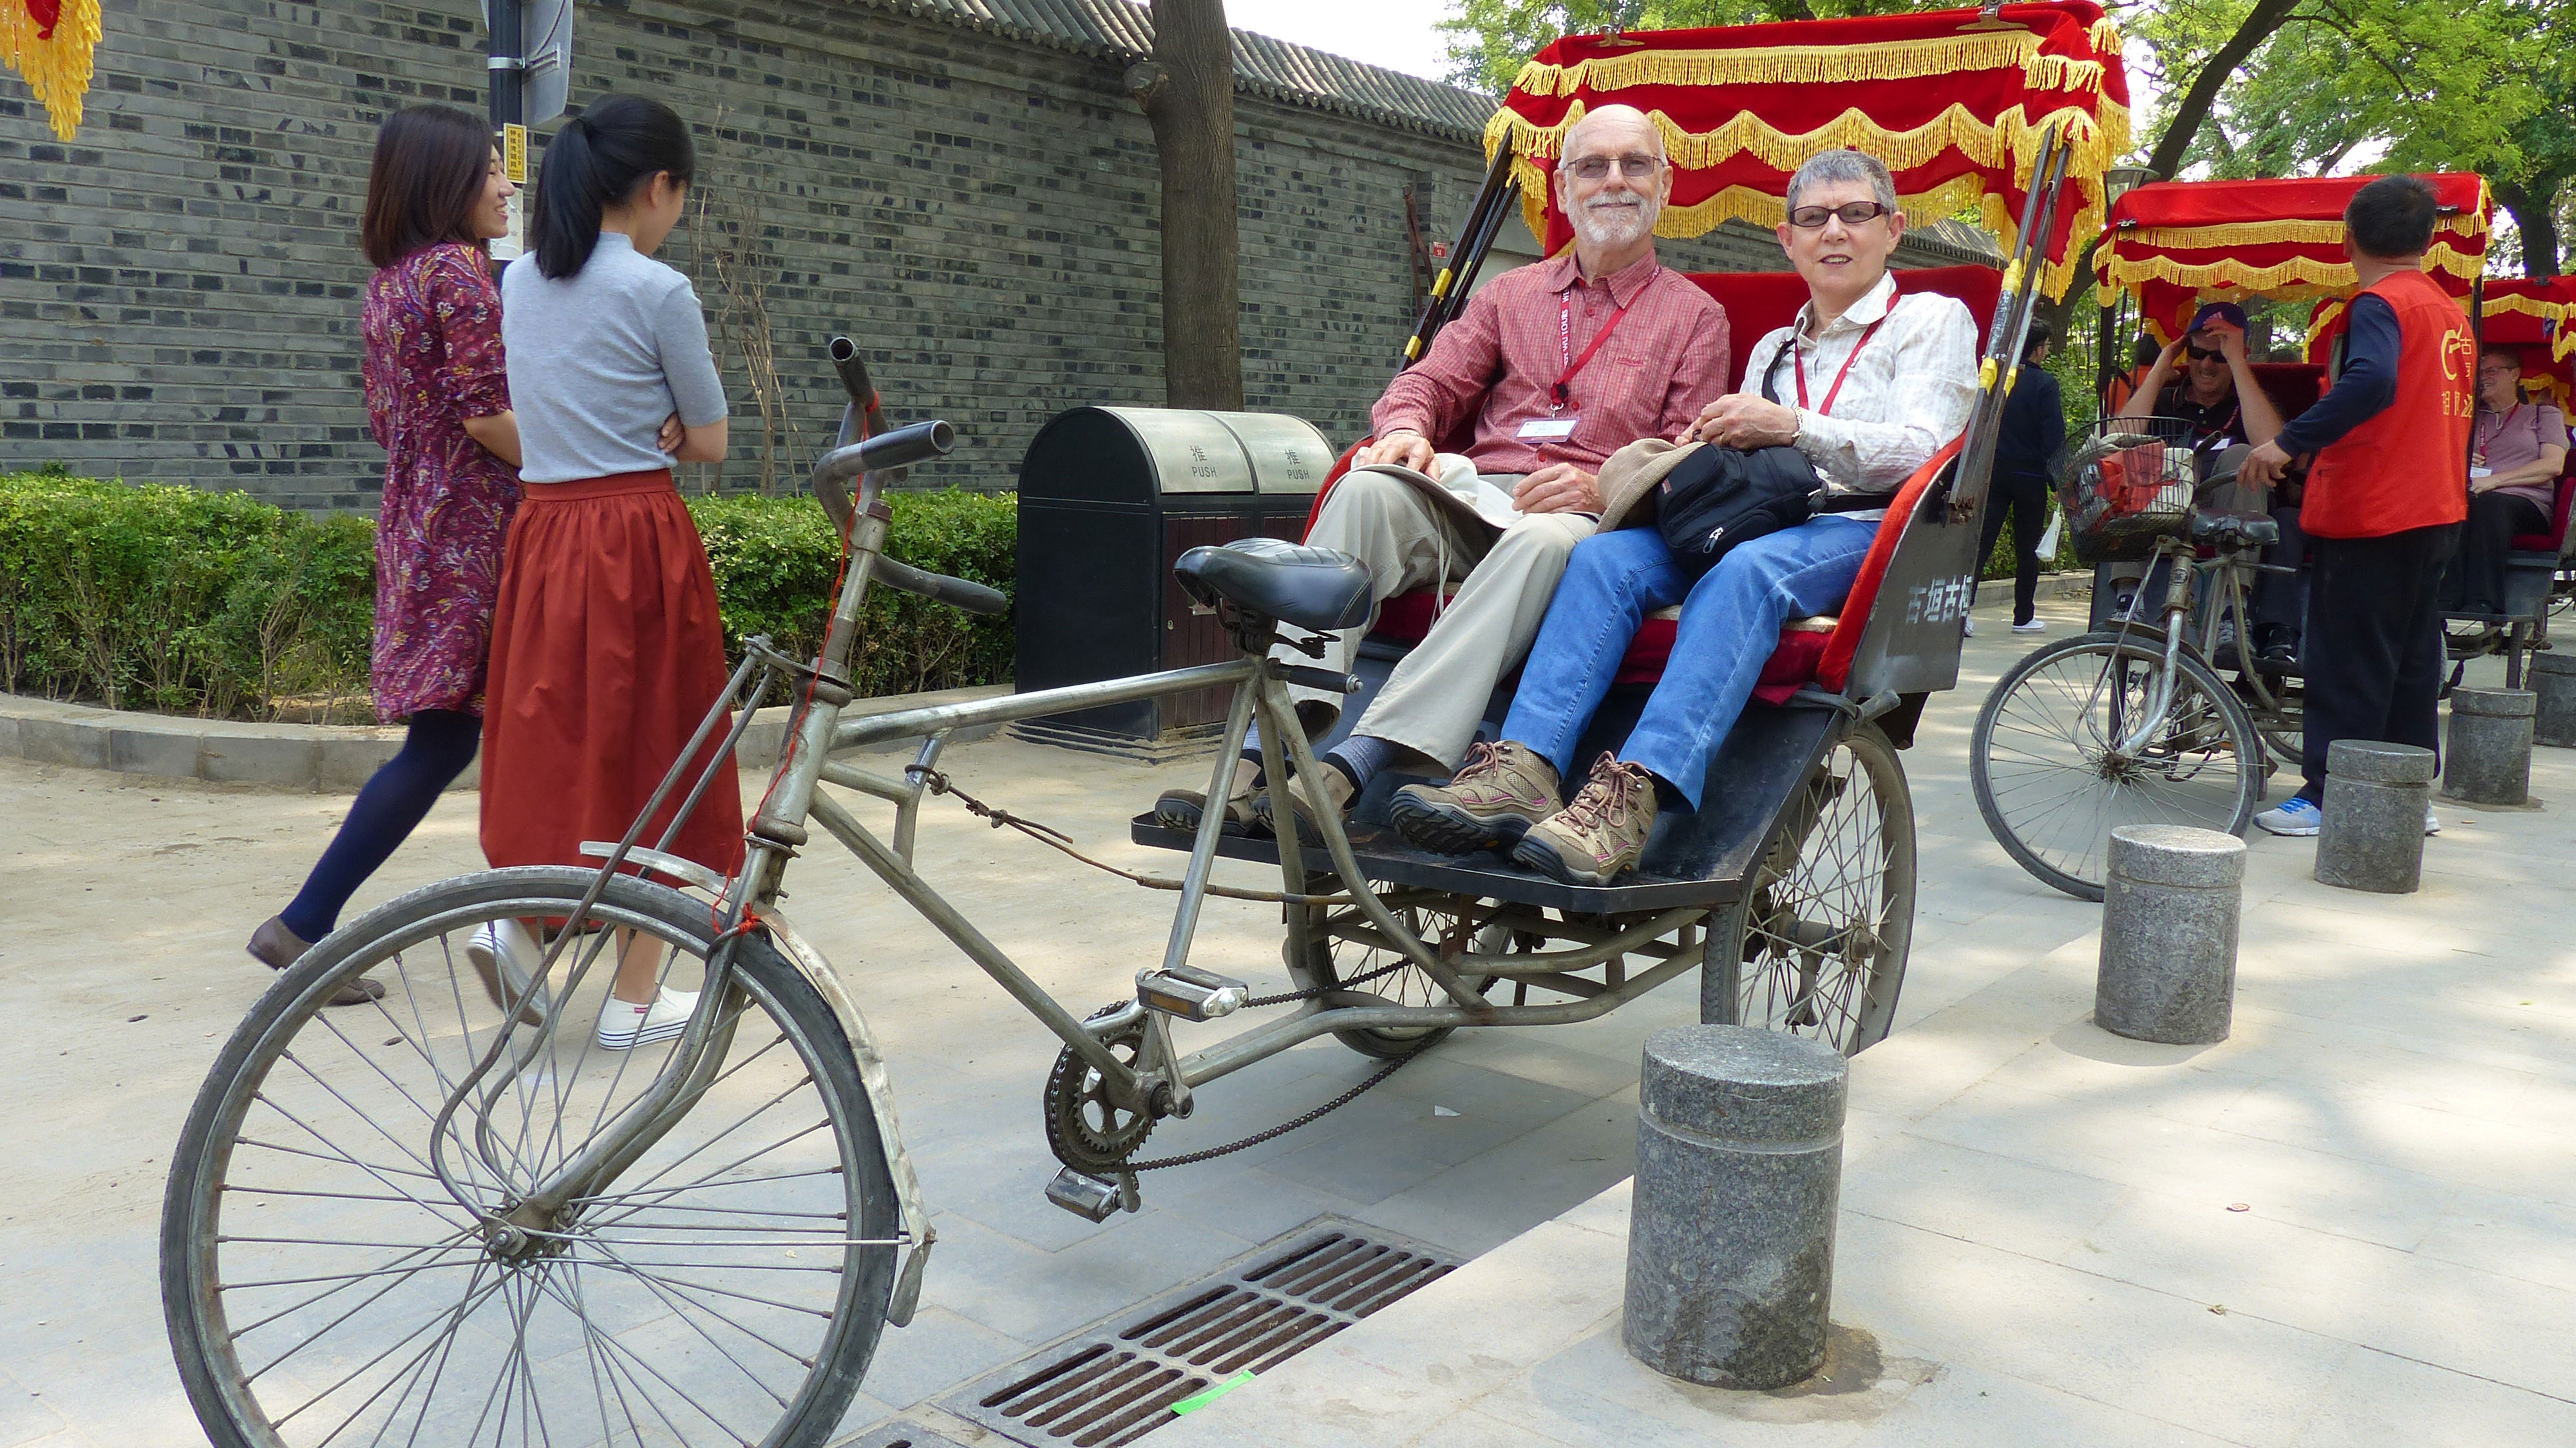 Customers on a rickshaw in Beijing, travel buddy